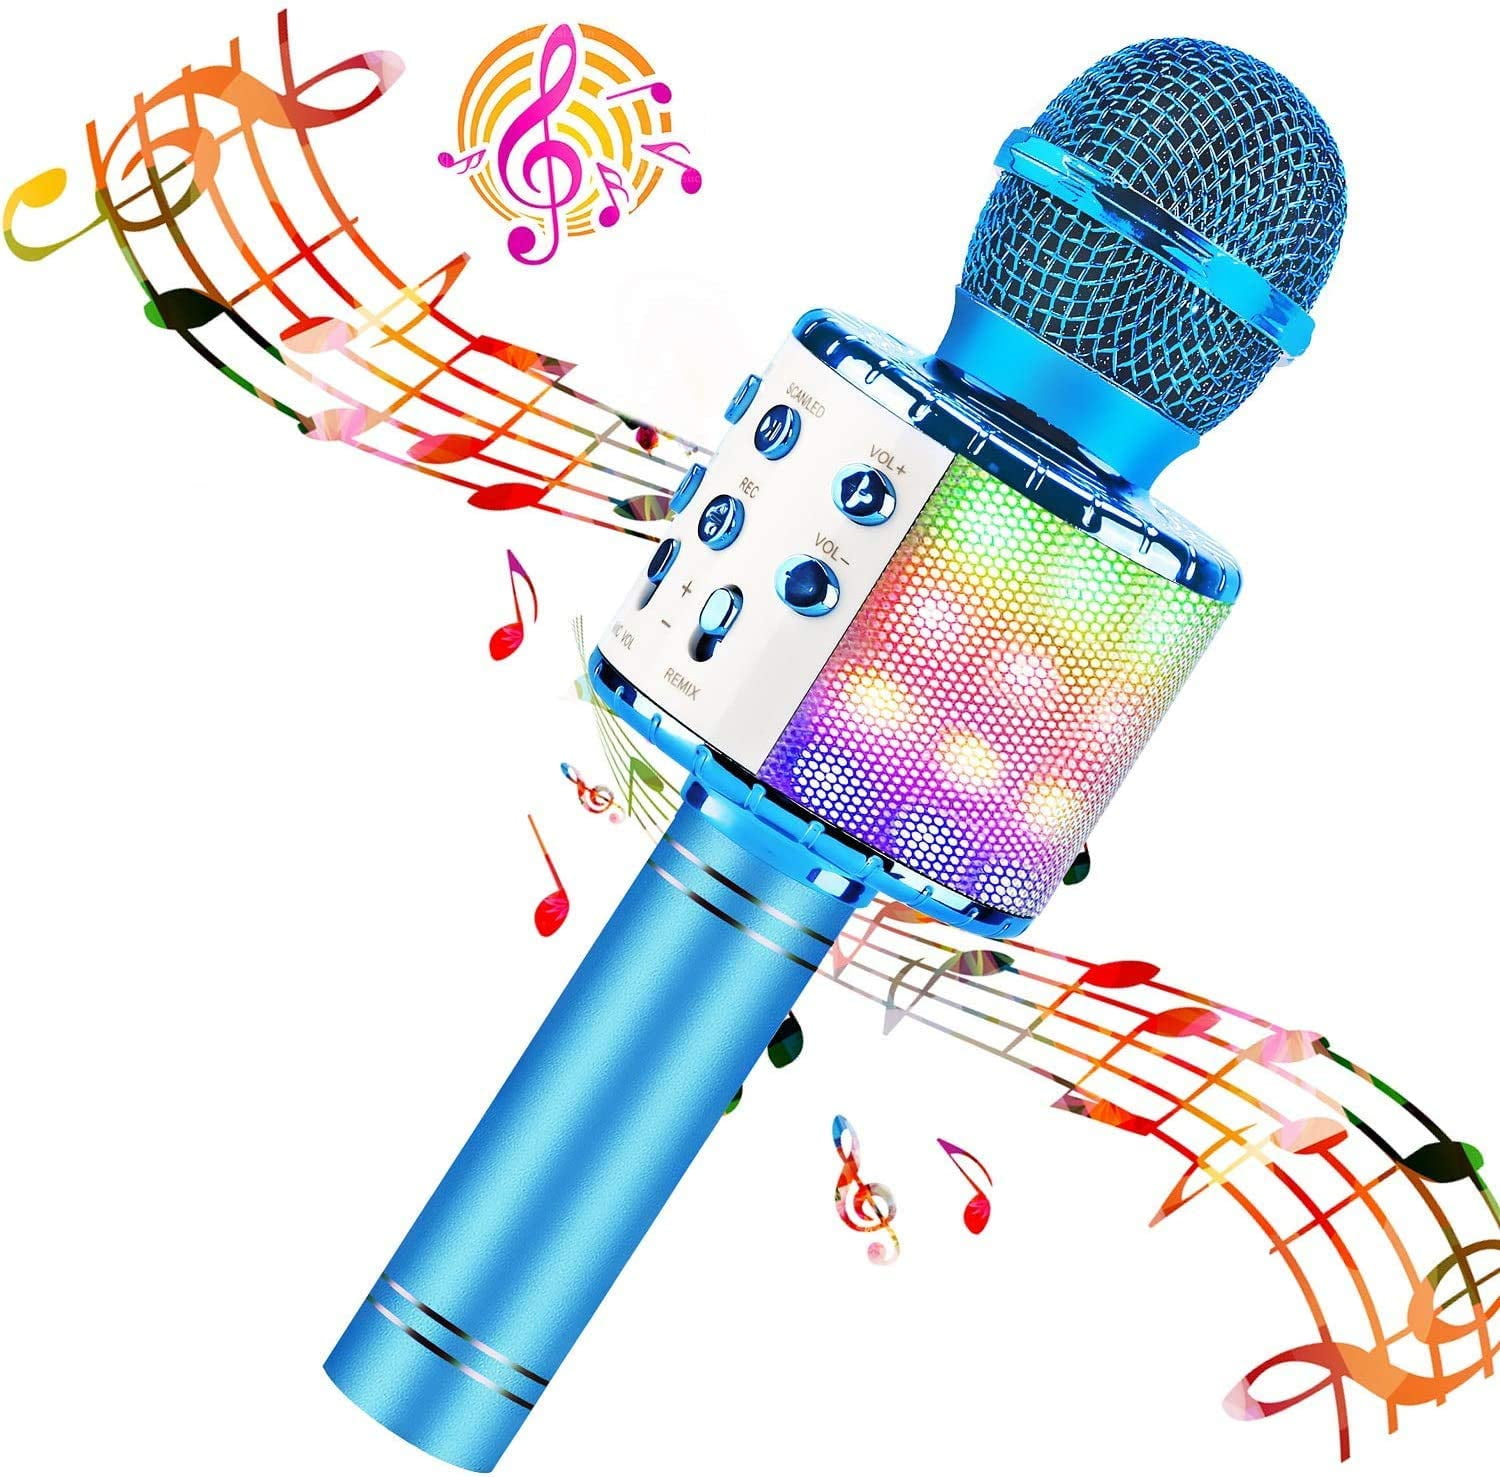 Bluetooth Microphone Karaoke Toy Wireless Mic Speaker Blue Handheld for Kids Girls Boys Birthday Gift,Bluetooth Microphone 